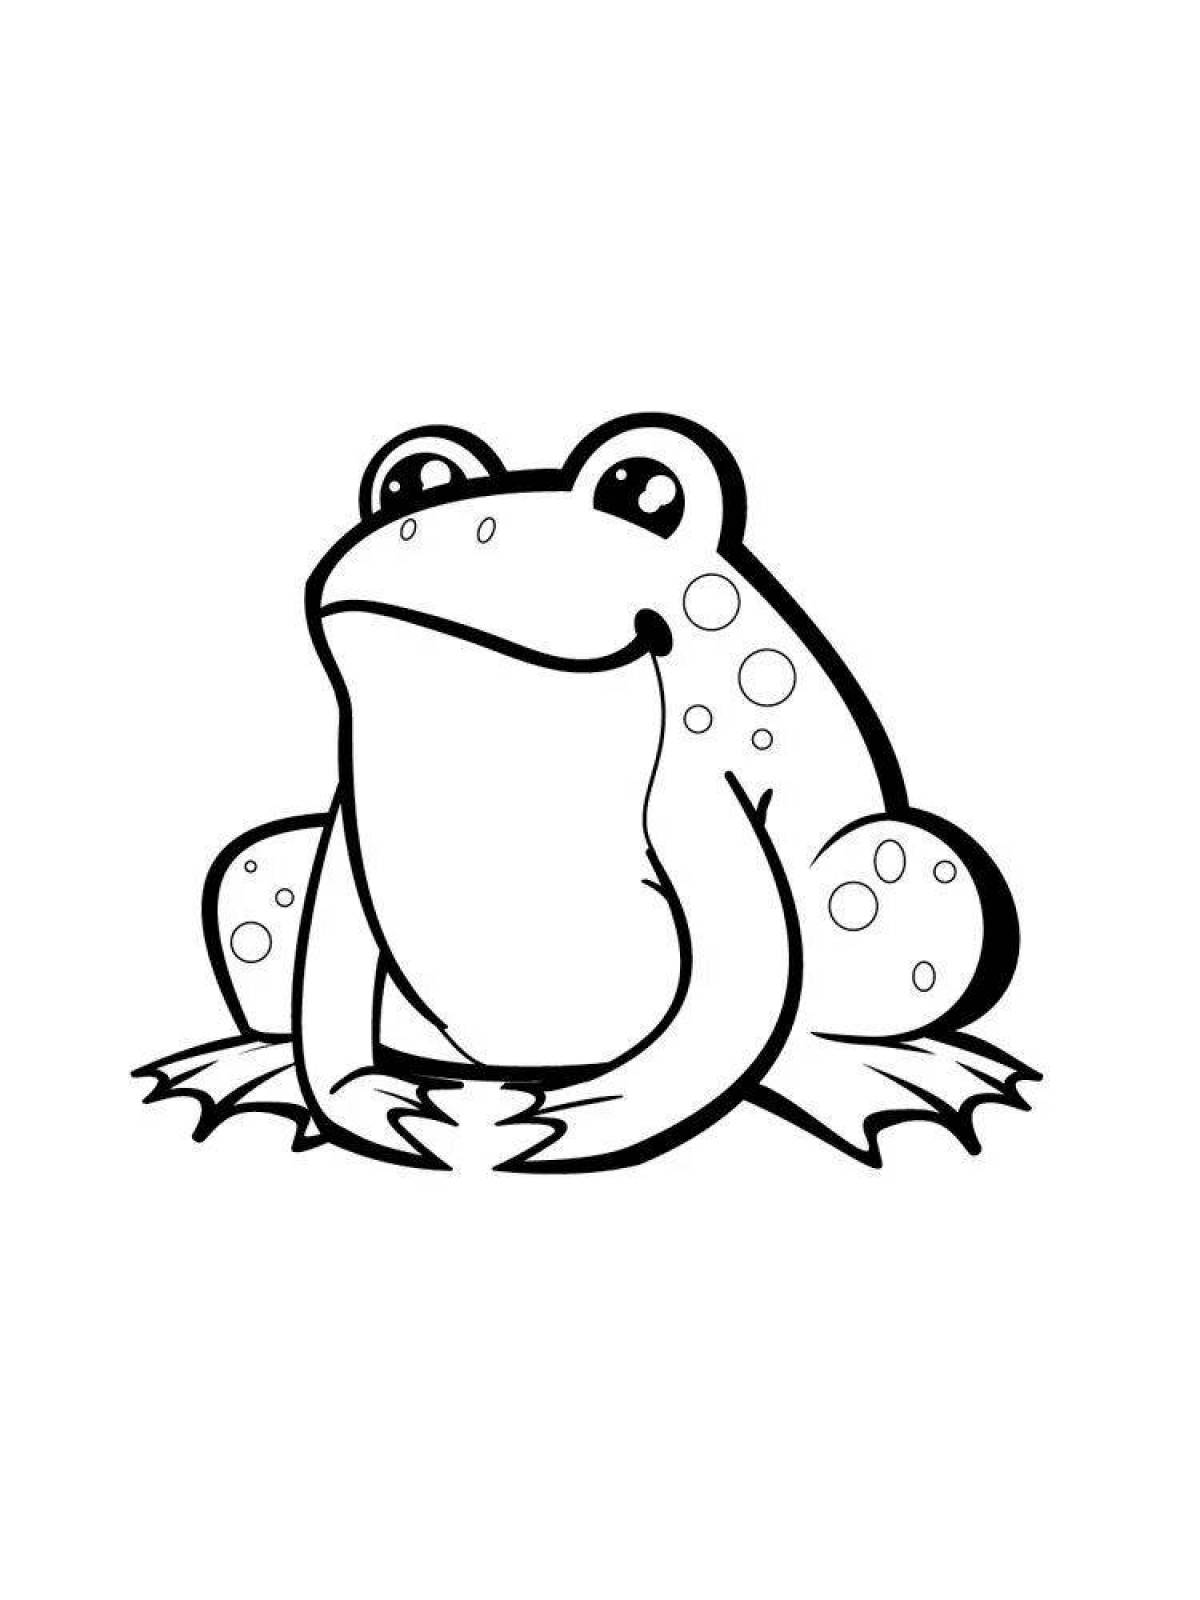 Cute cute frog coloring book